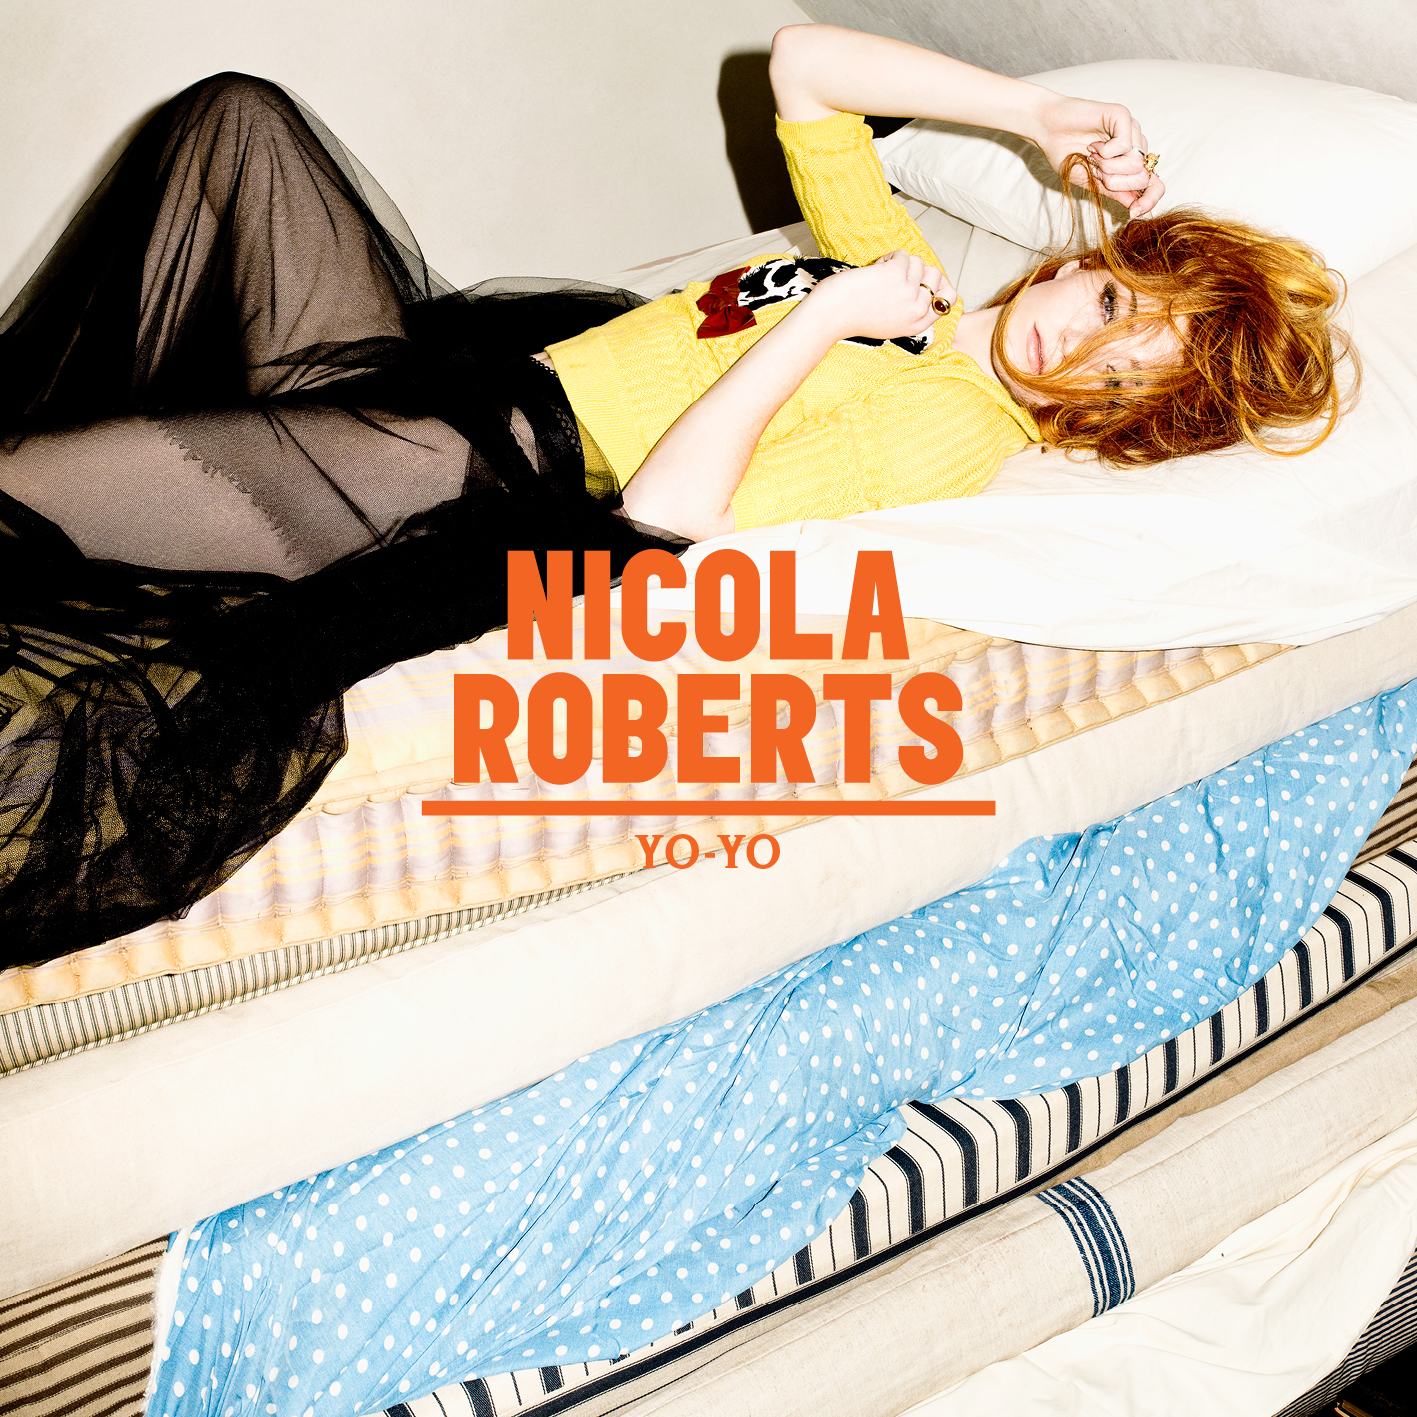 Nicola-roberts-Yo-Yo-single-cover.jpg